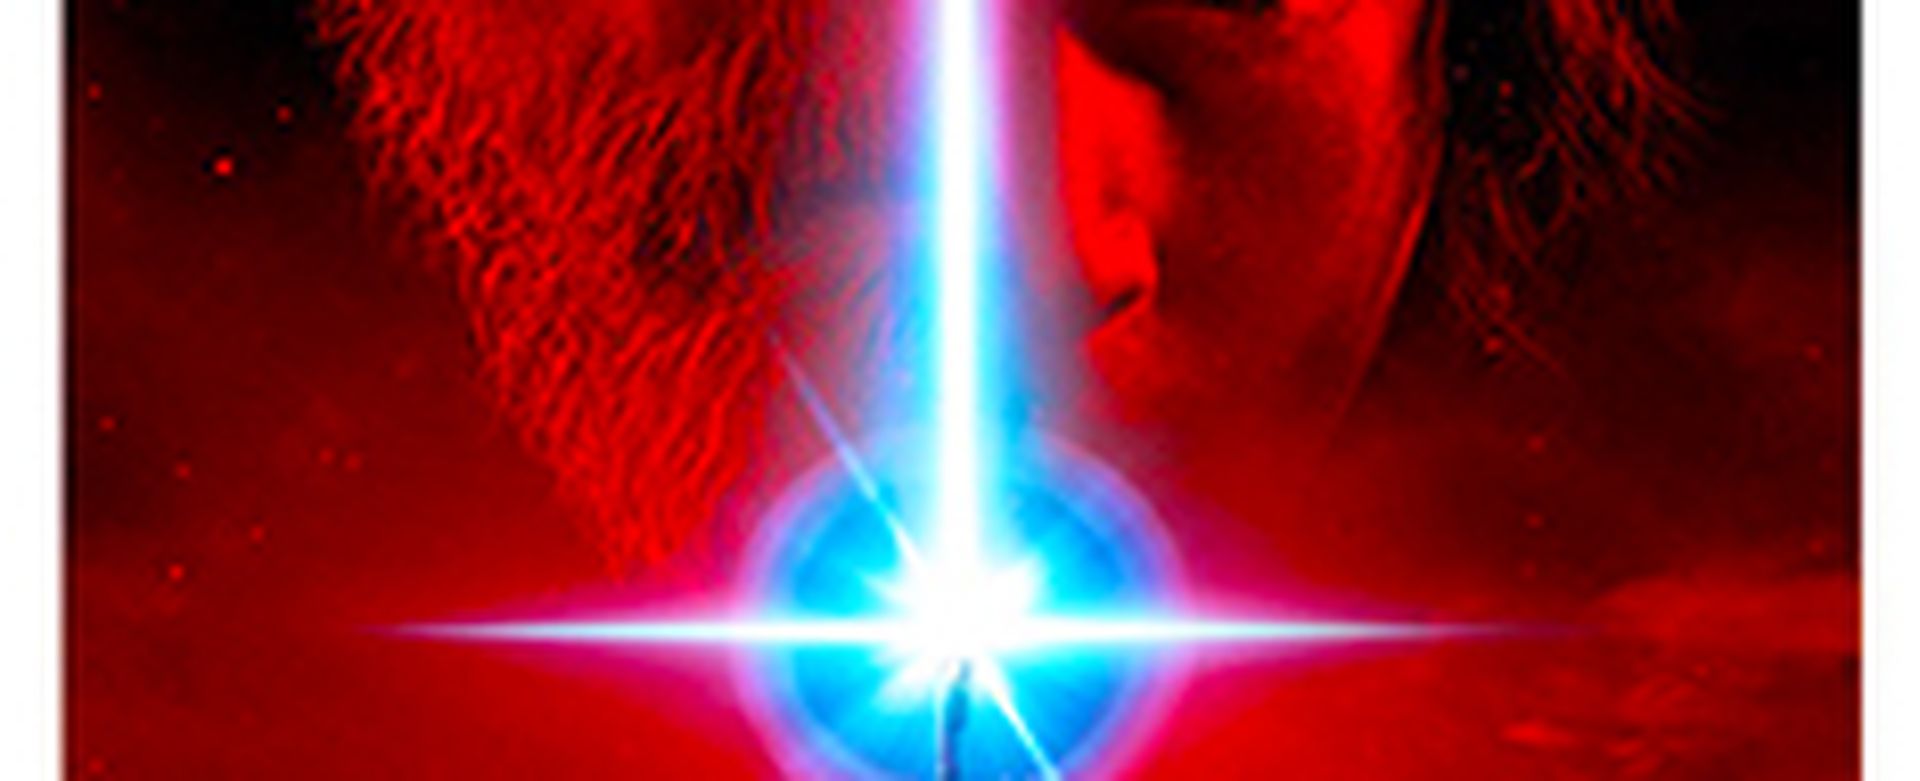 Star Wars 8 - Os Últimos Jedi - 2D | 14/12/17